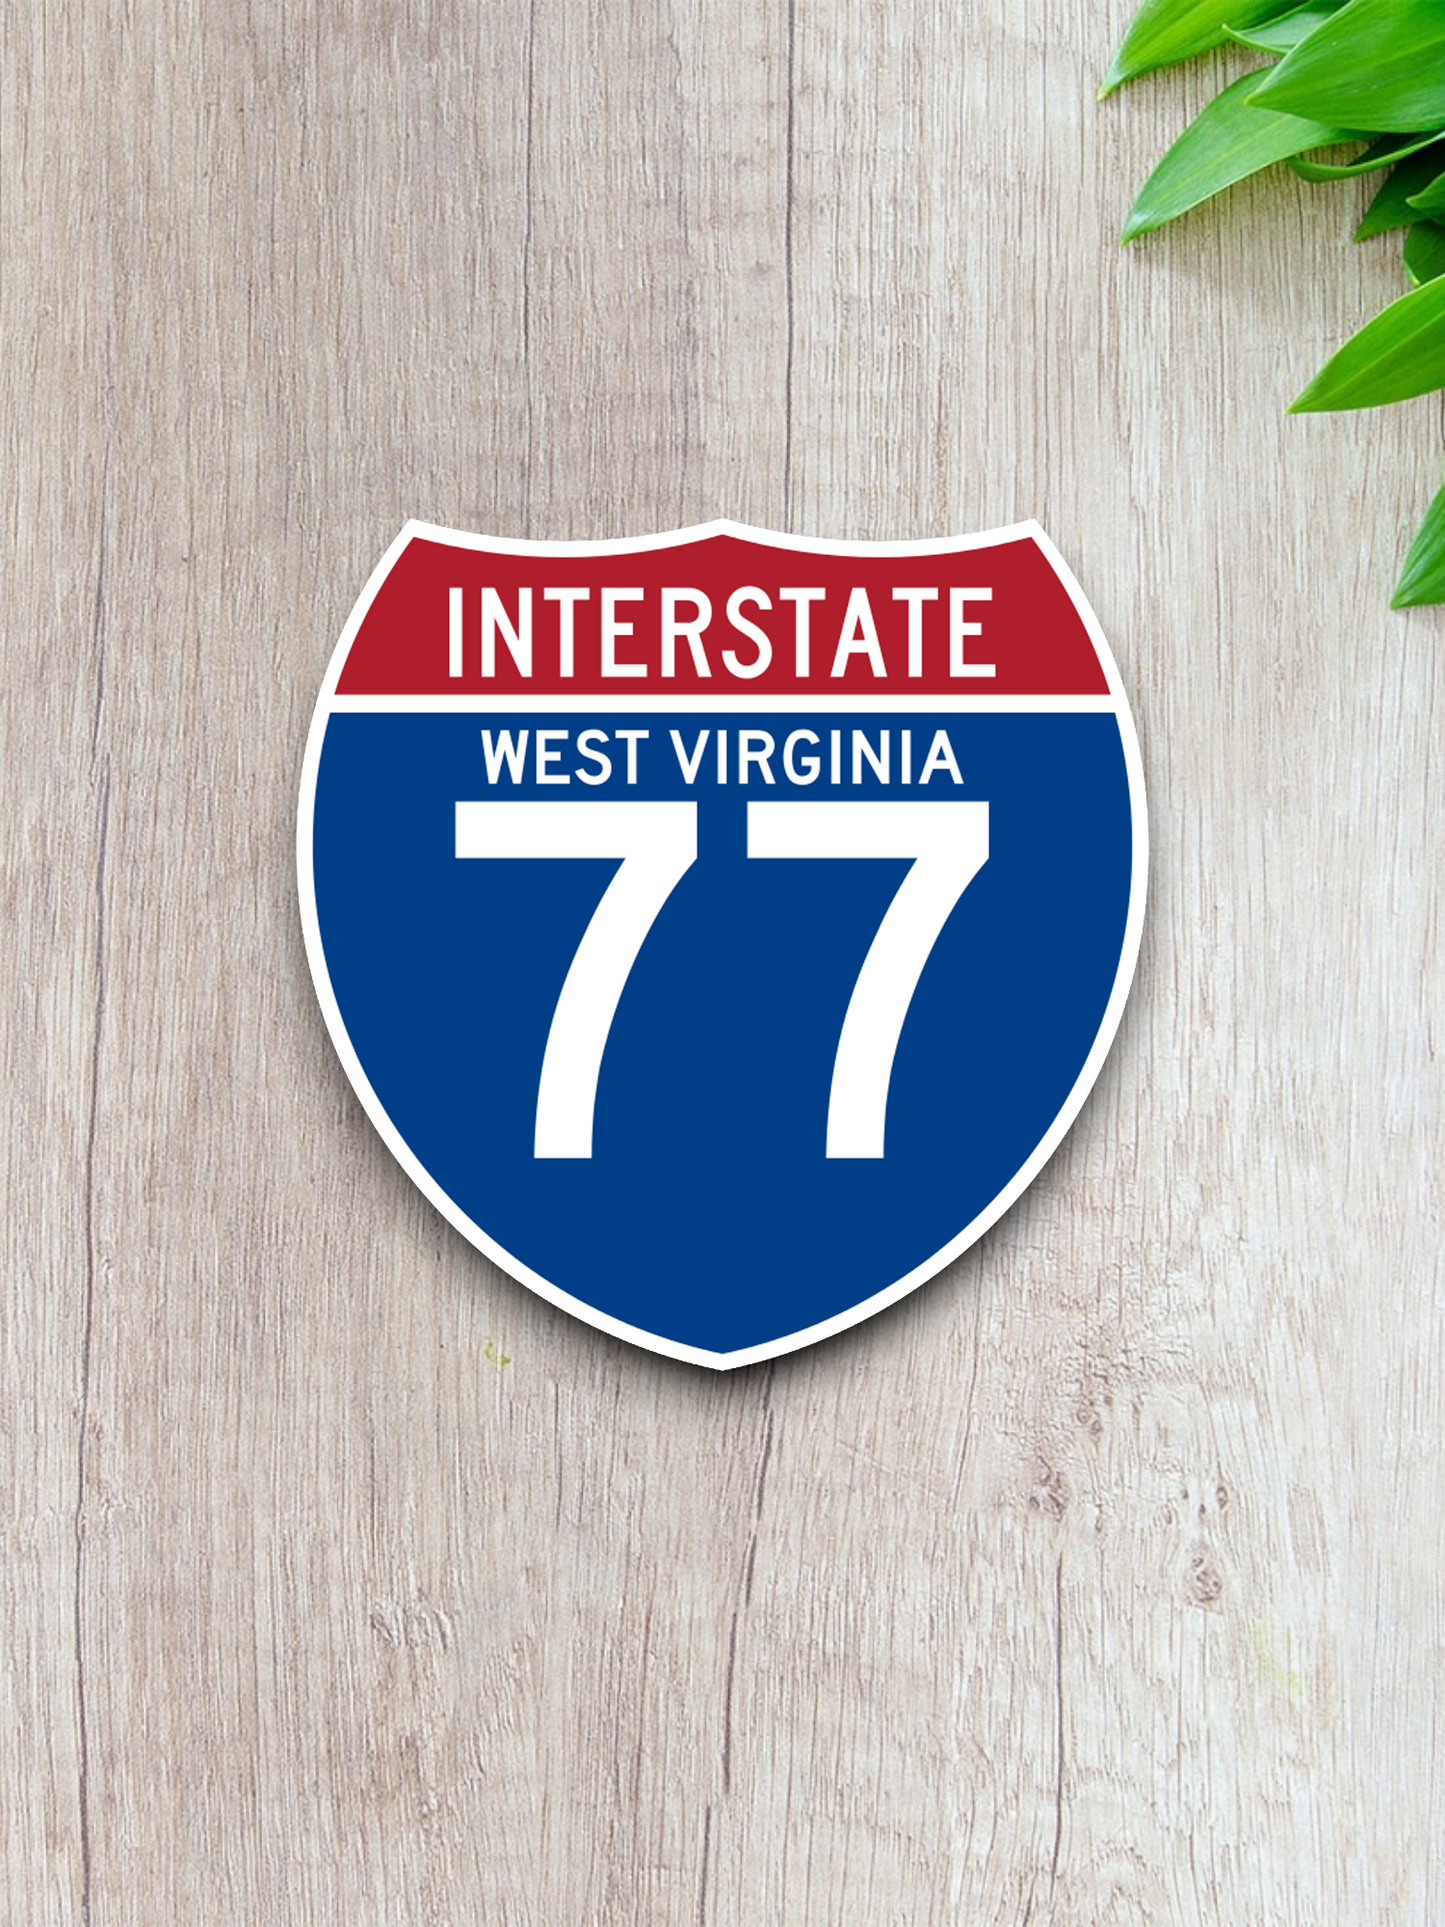 Interstate I-77 West Virginia - Road Sign Sticker